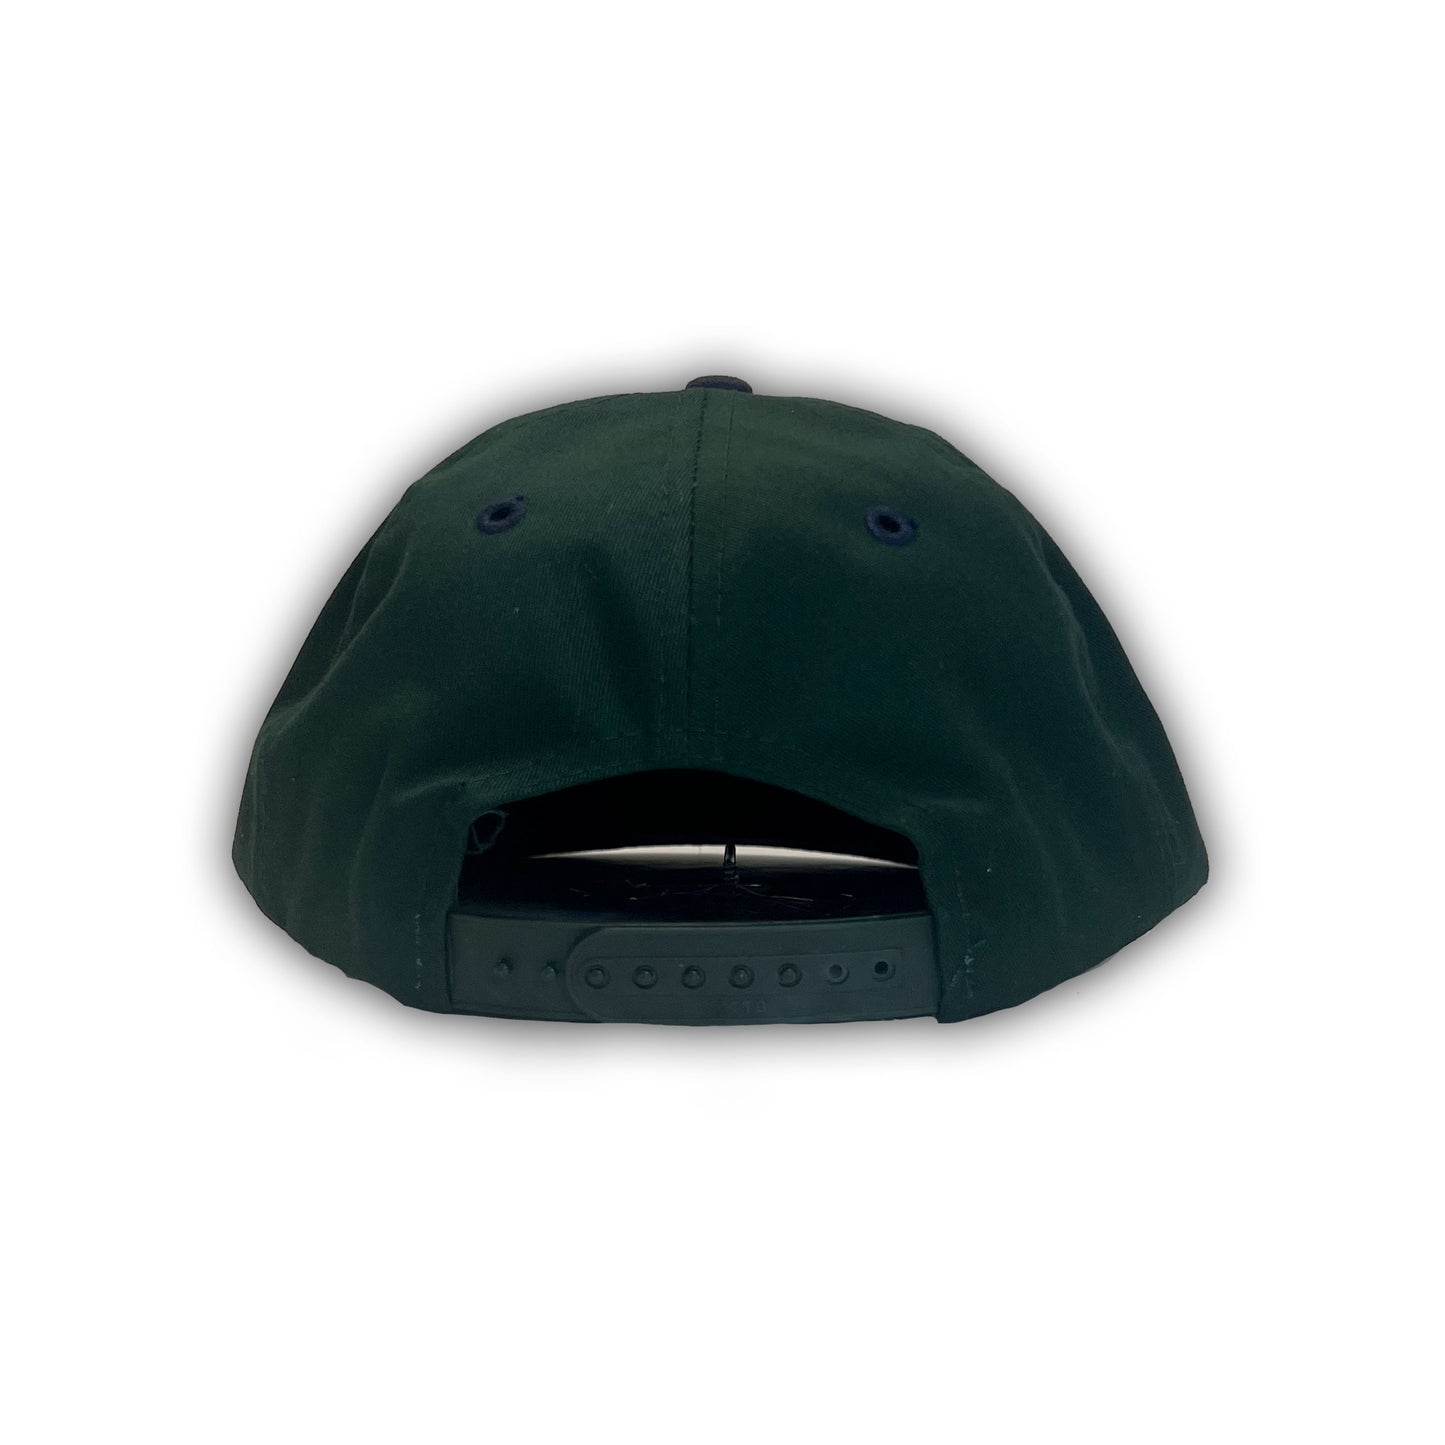 Bowman. Hat. Green/Navy.